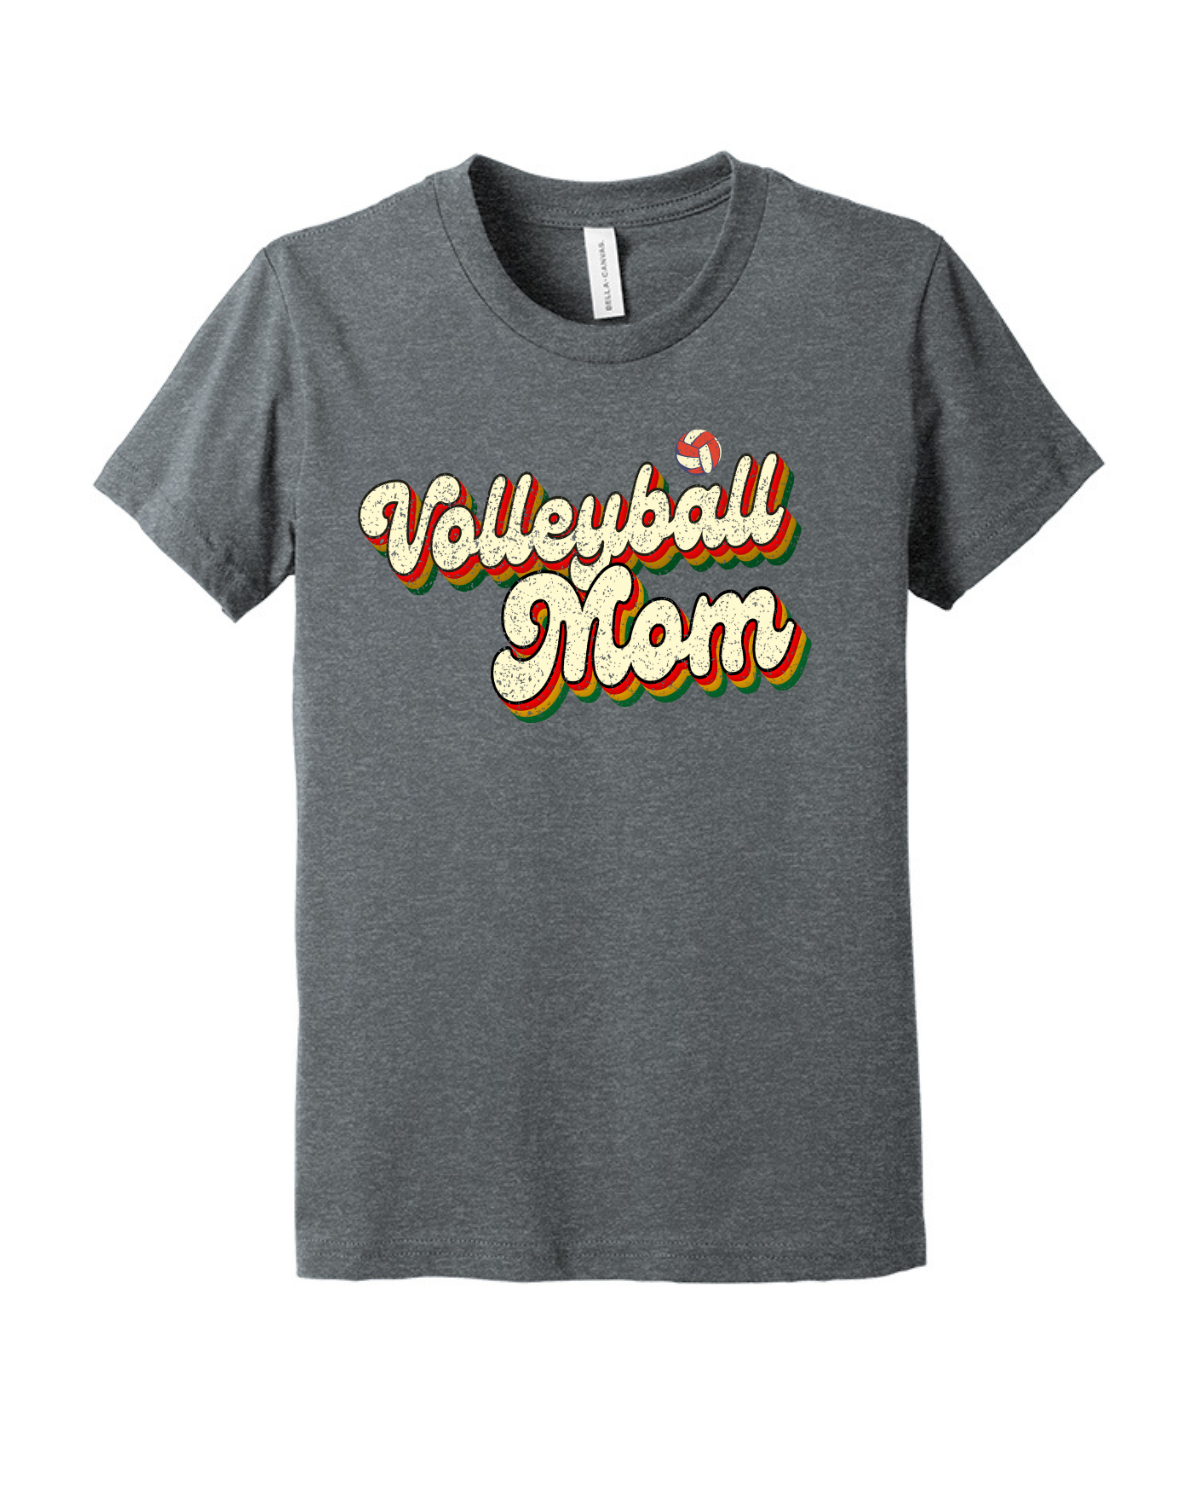 Volleyball Mom Tee